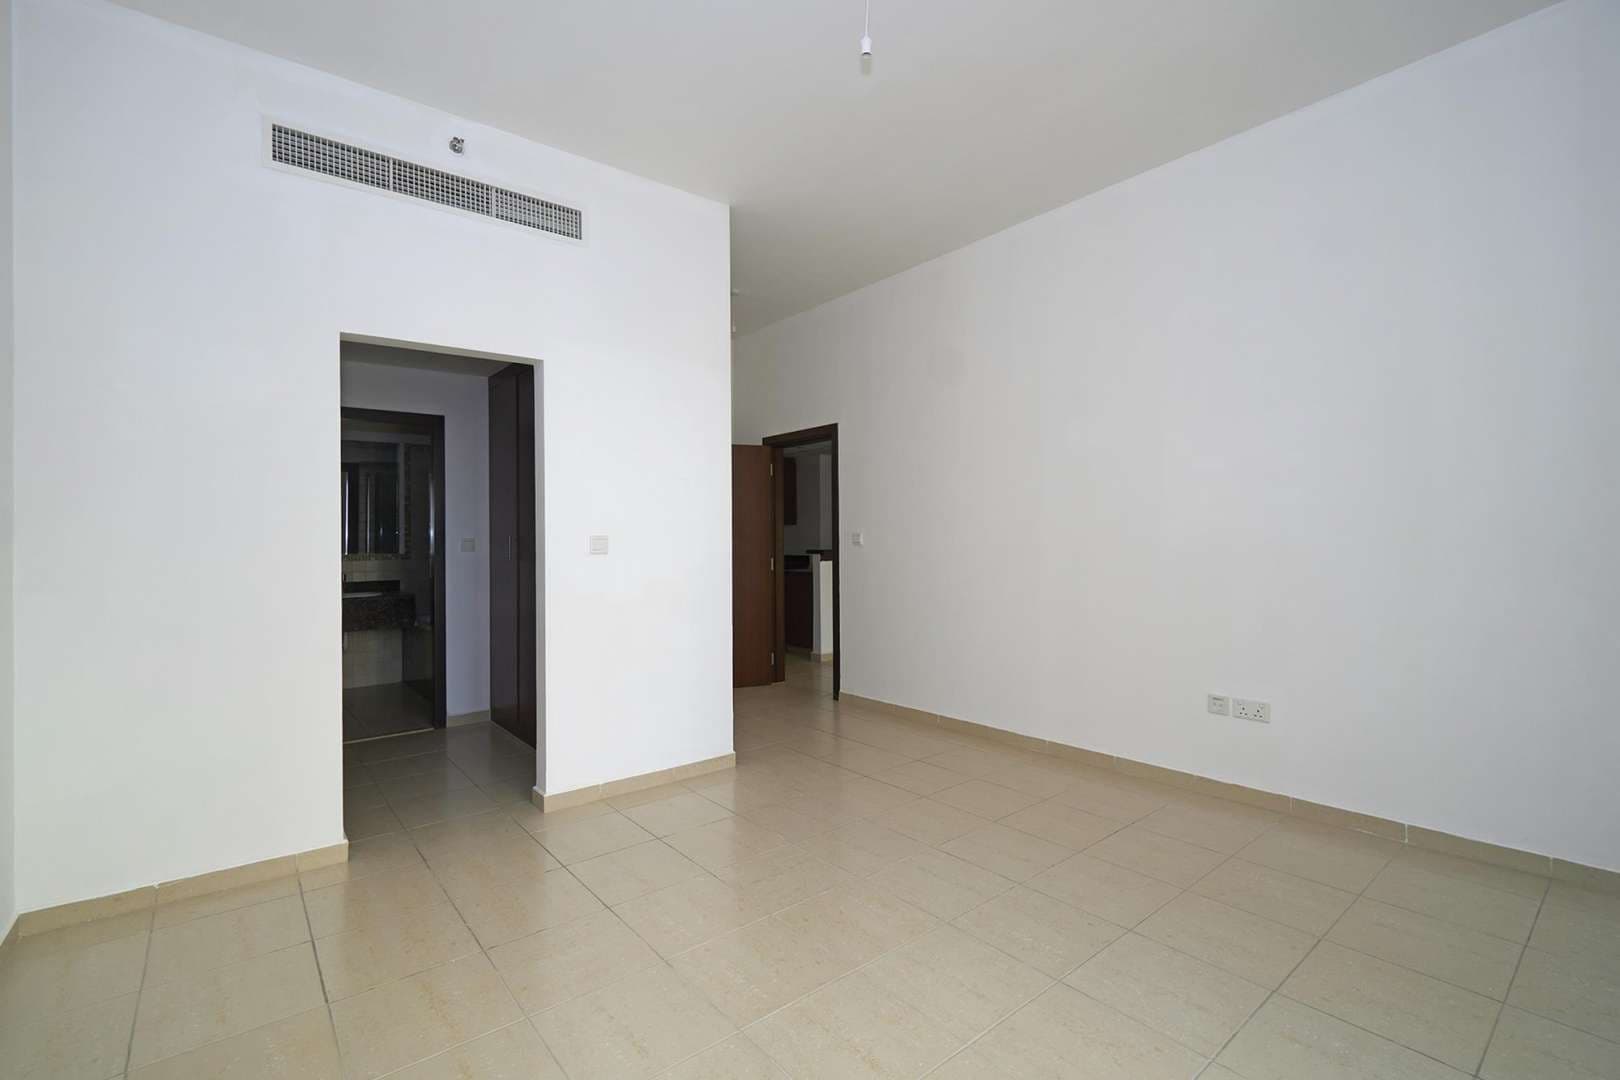 1 Bedroom Apartment For Sale Rimal 4 Lp06424 545fc2c74d1a0c0.jpg